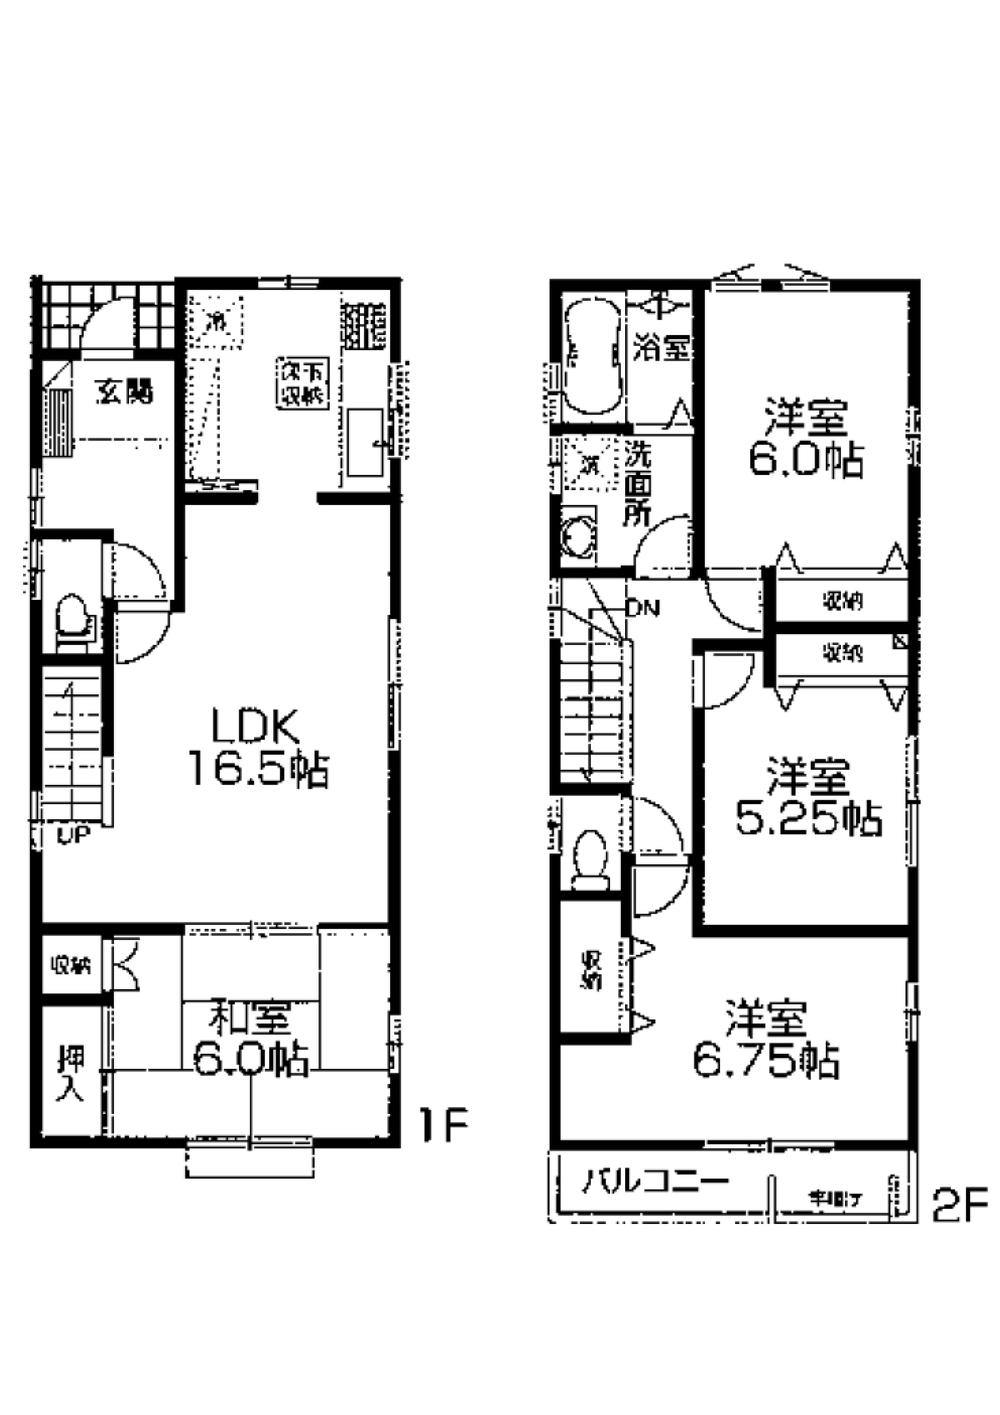 Floor plan. (3 Building), Price 29,300,000 yen, 4LDK, Land area 127.42 sq m , Building area 97.7 sq m